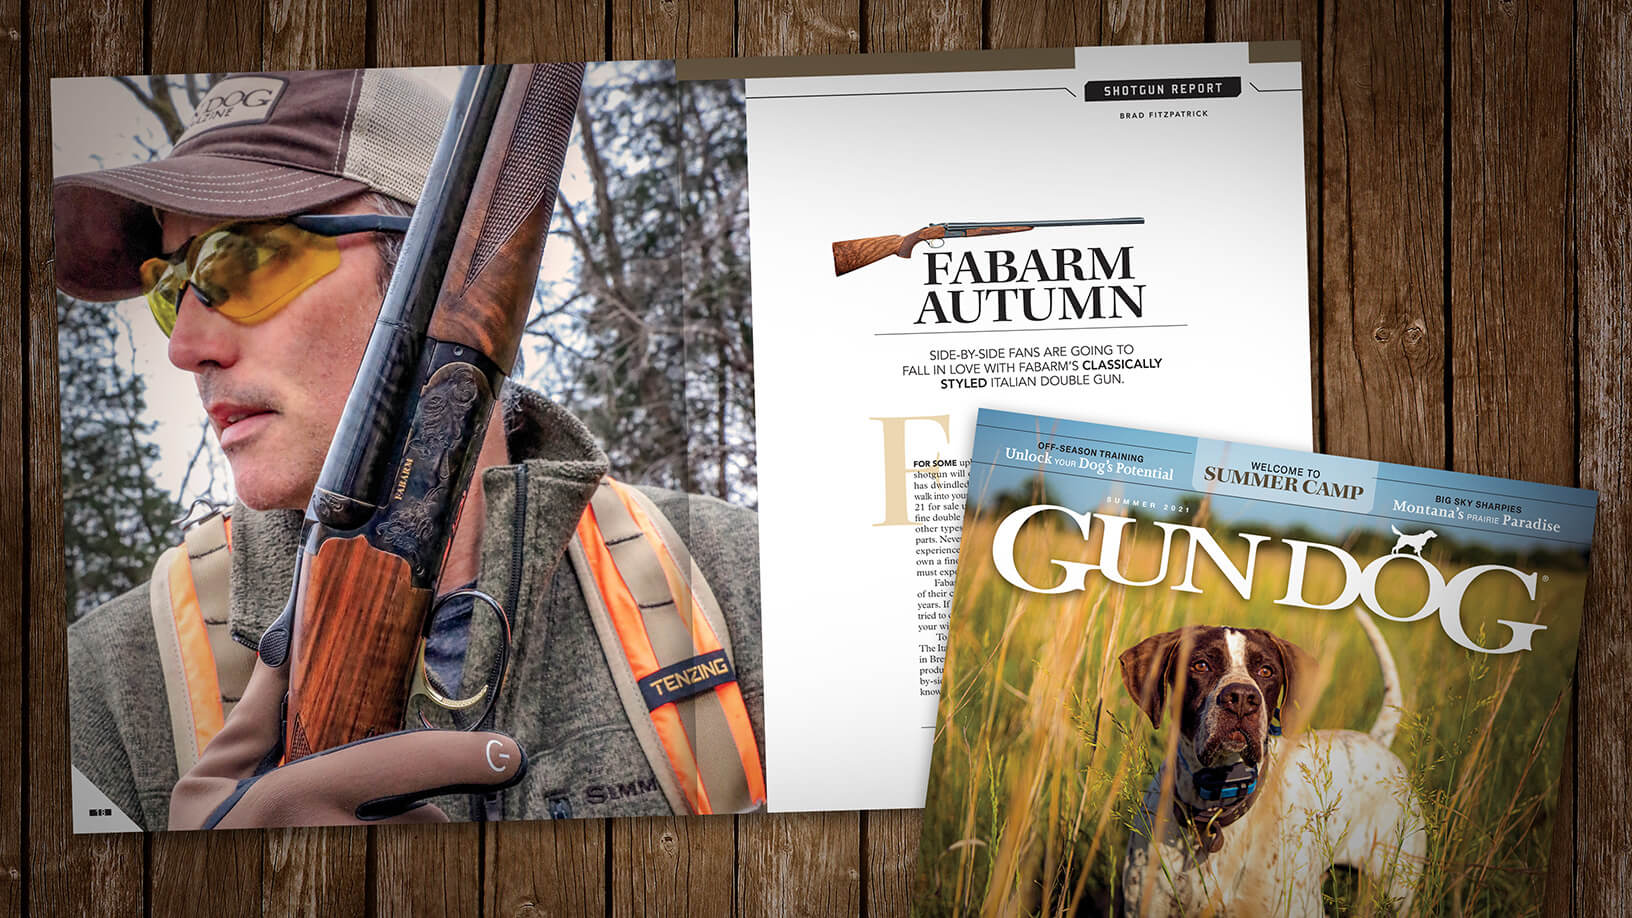 [Gun Dog 06:21] Shotgun Report: Fabarm Autumn by Brad Fitzpatrick